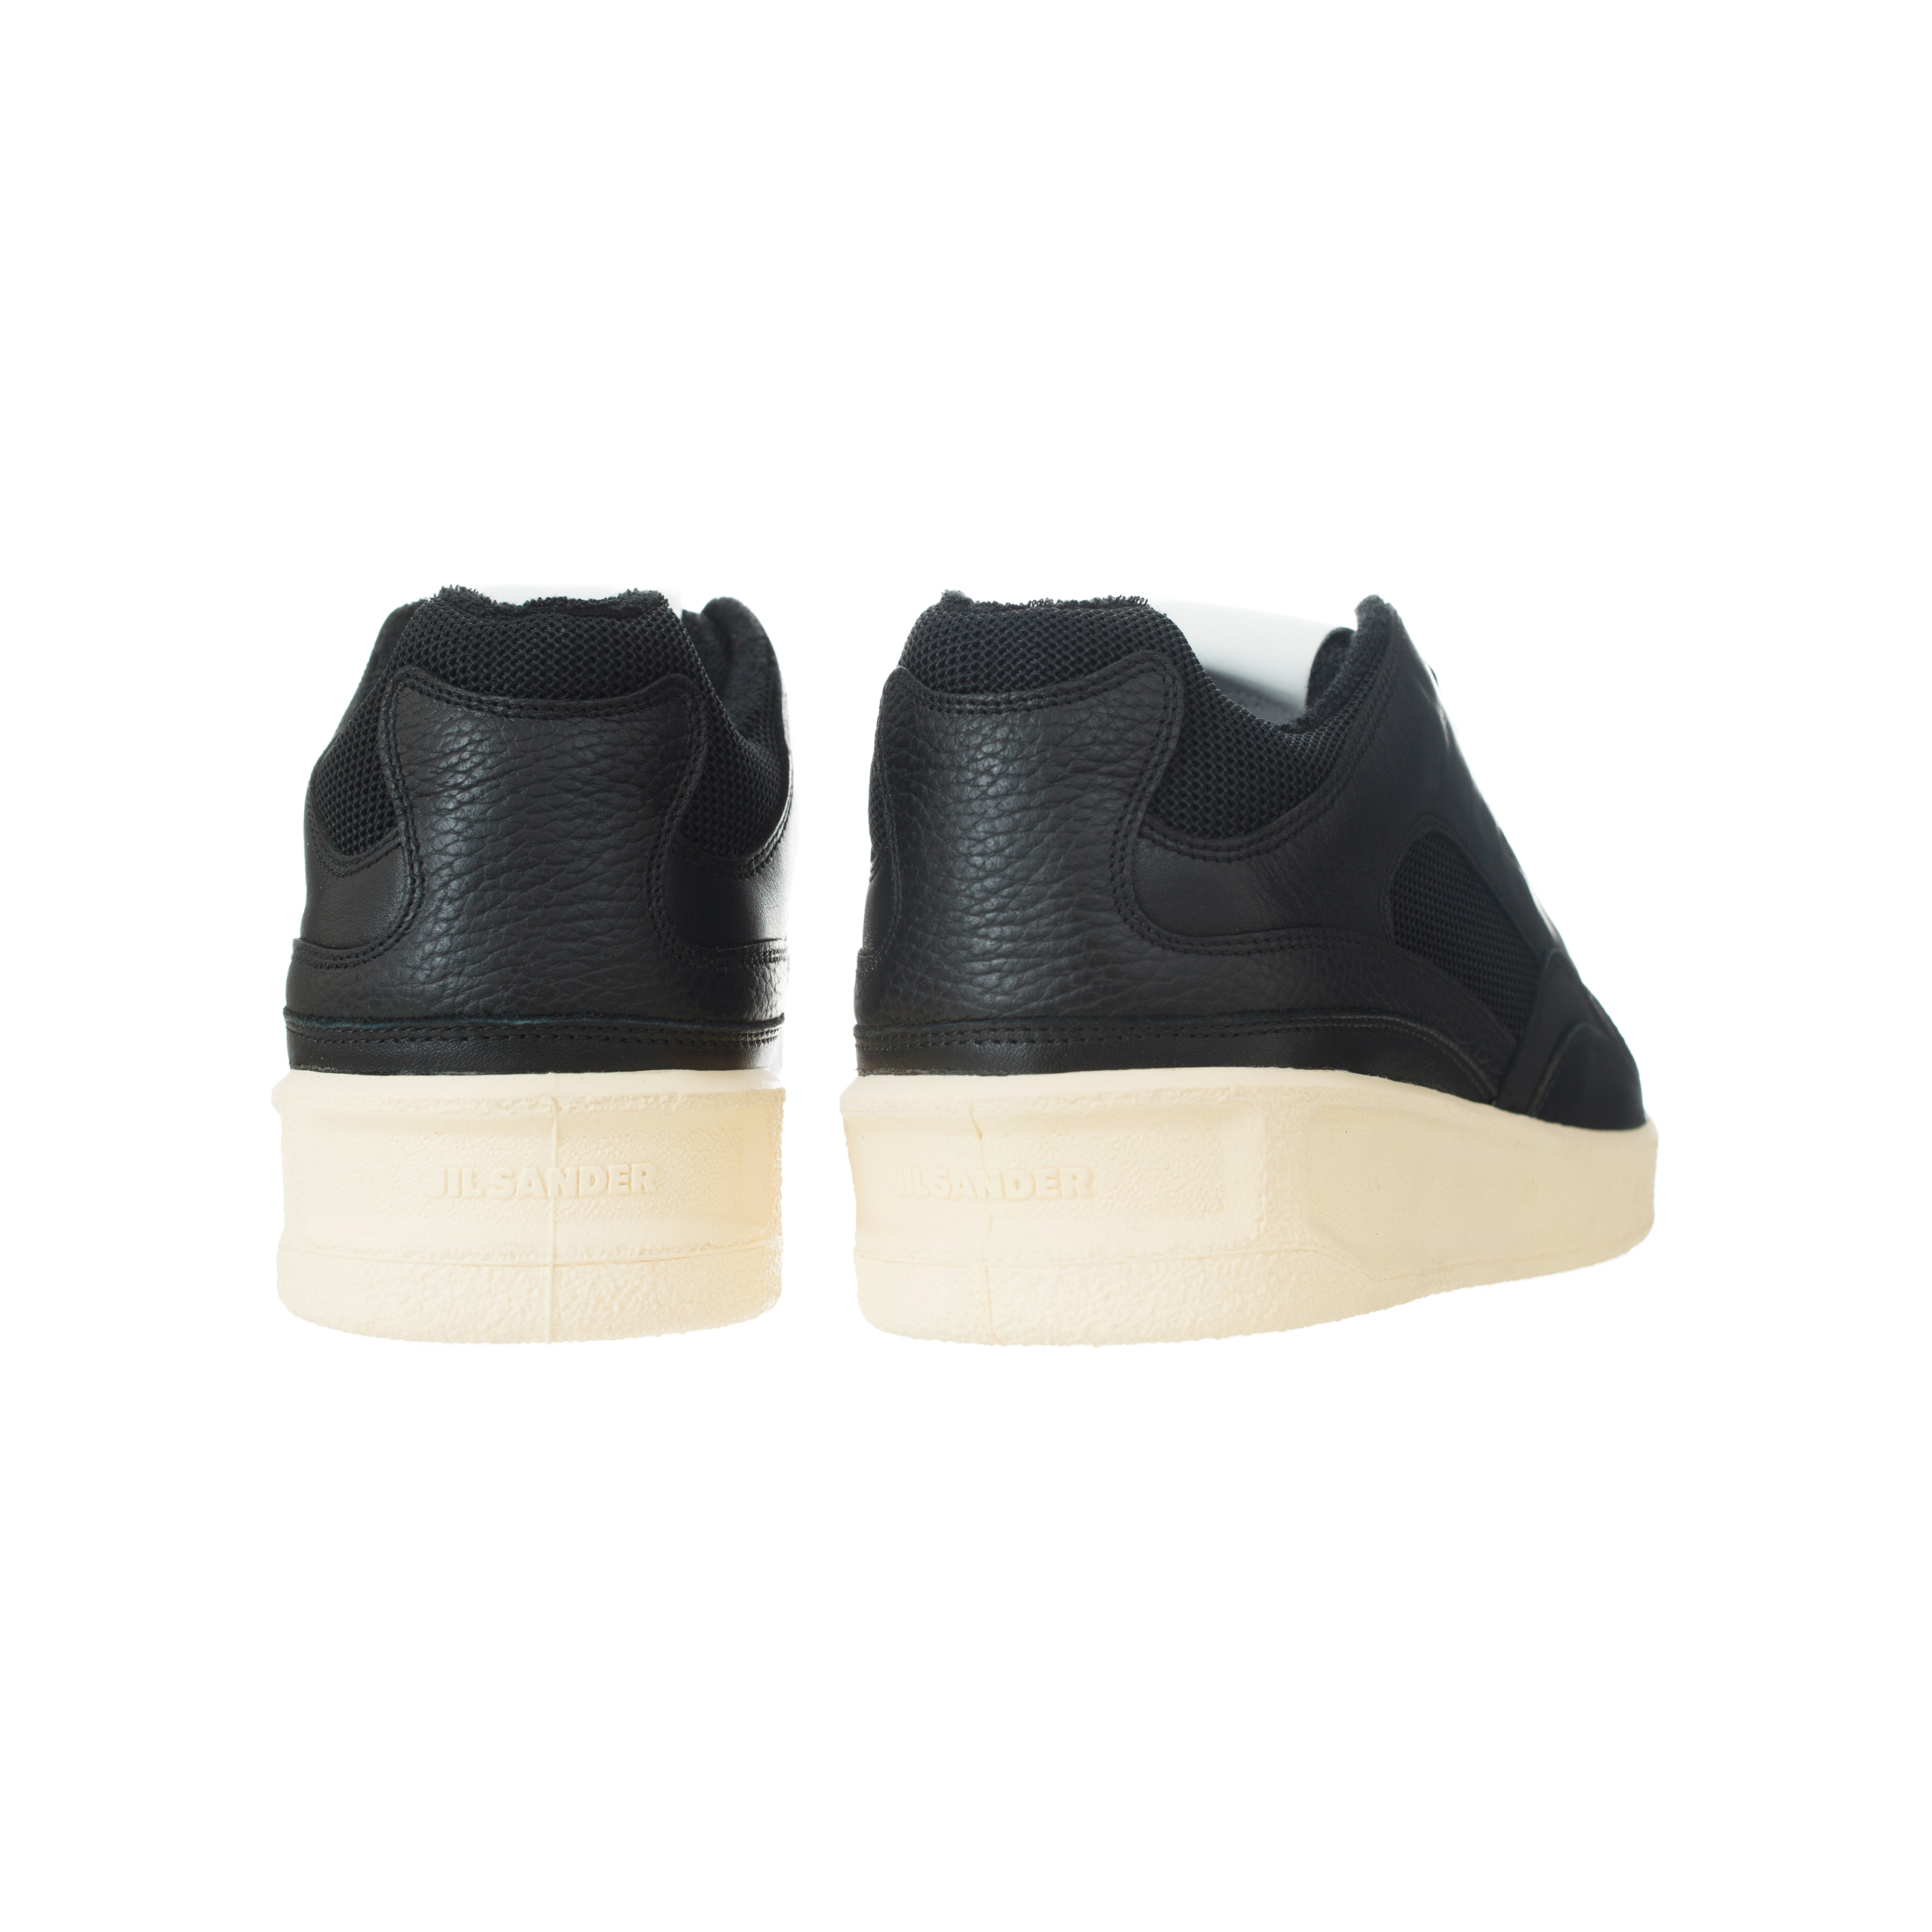 Buy Jil Sander men black leather sneakers for $740 online on SV77